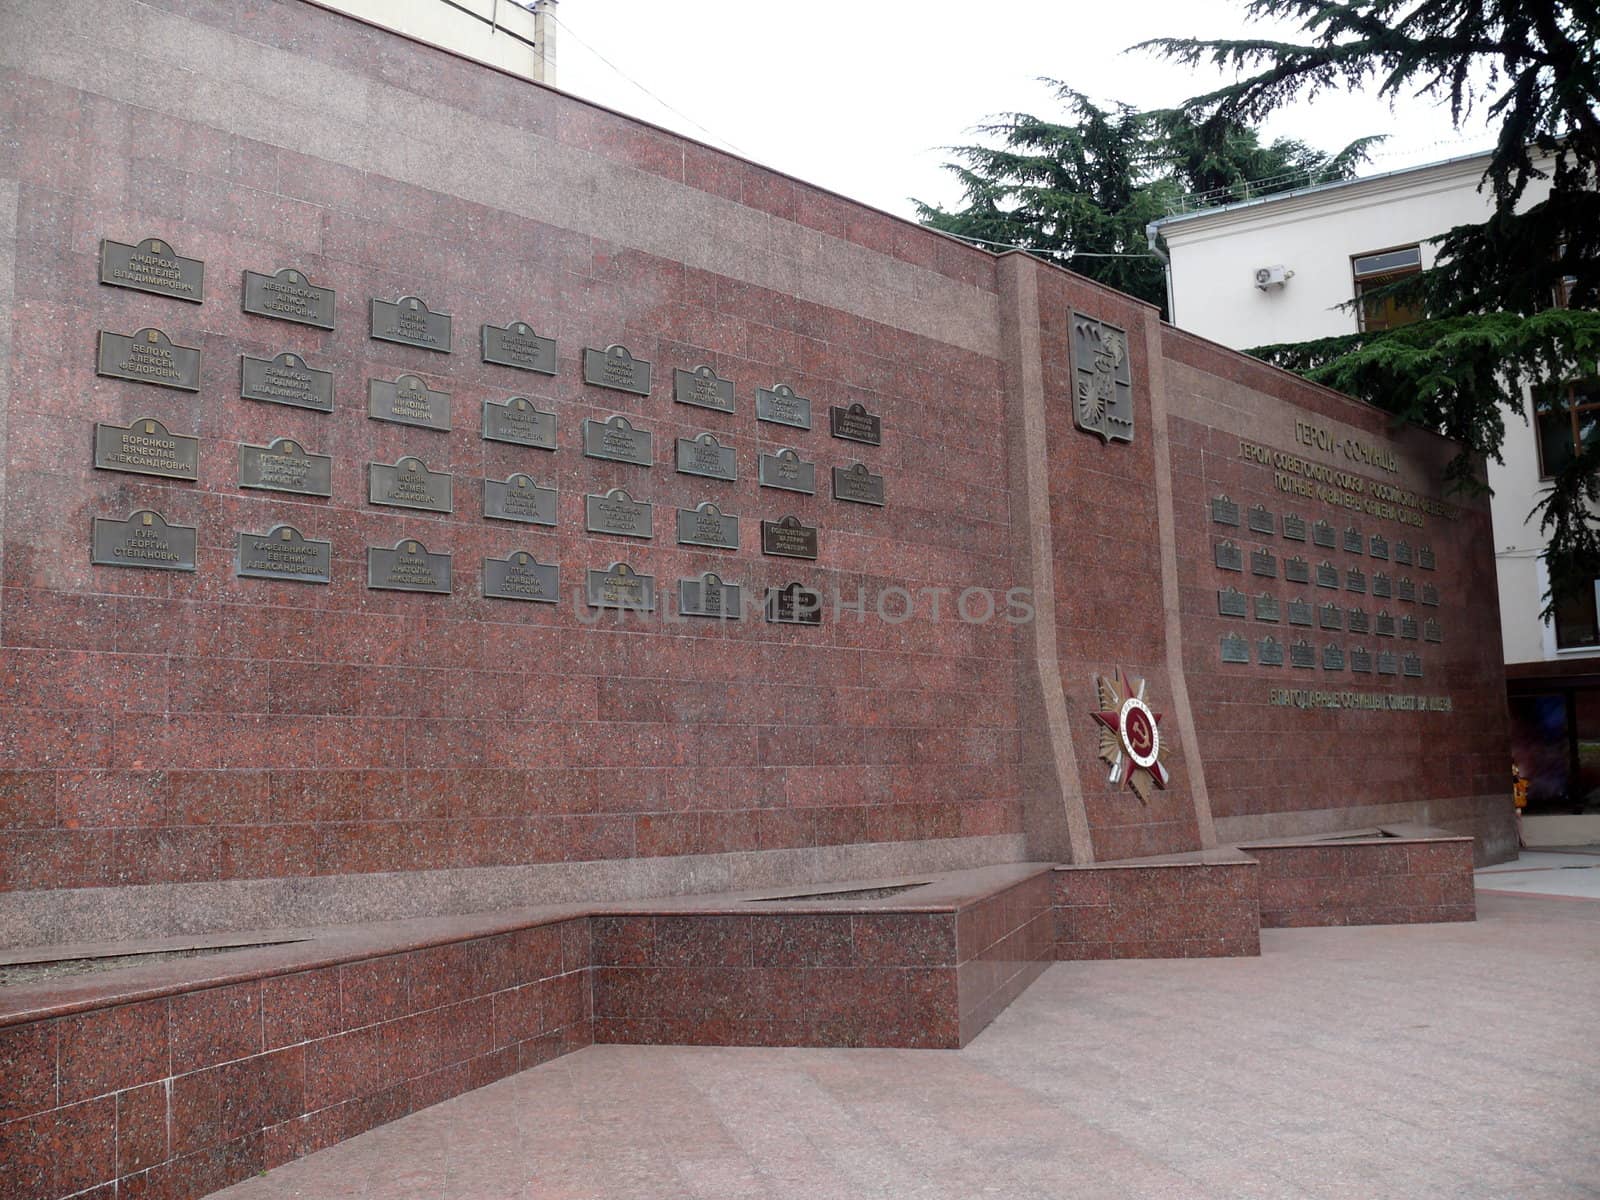 War memorial in the Sochi